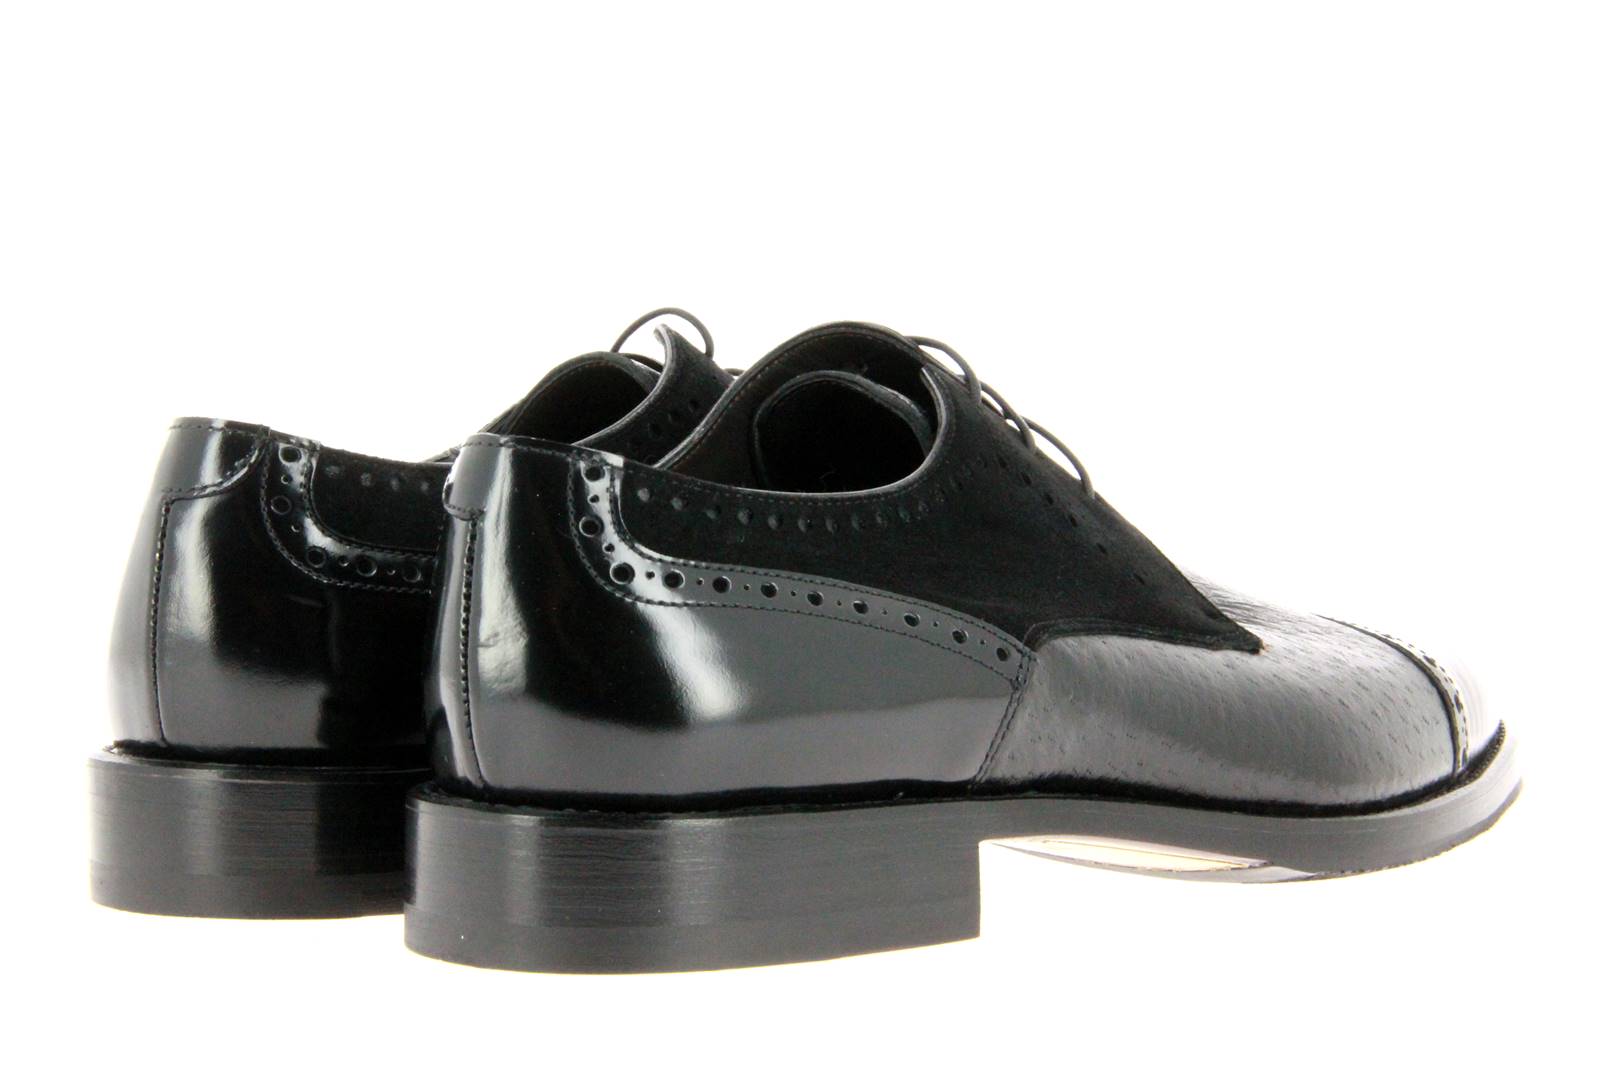 Moreschi 14620 Full Ostrich Kamel Brown Lace-up Shoes US Size 11.5 | eBay